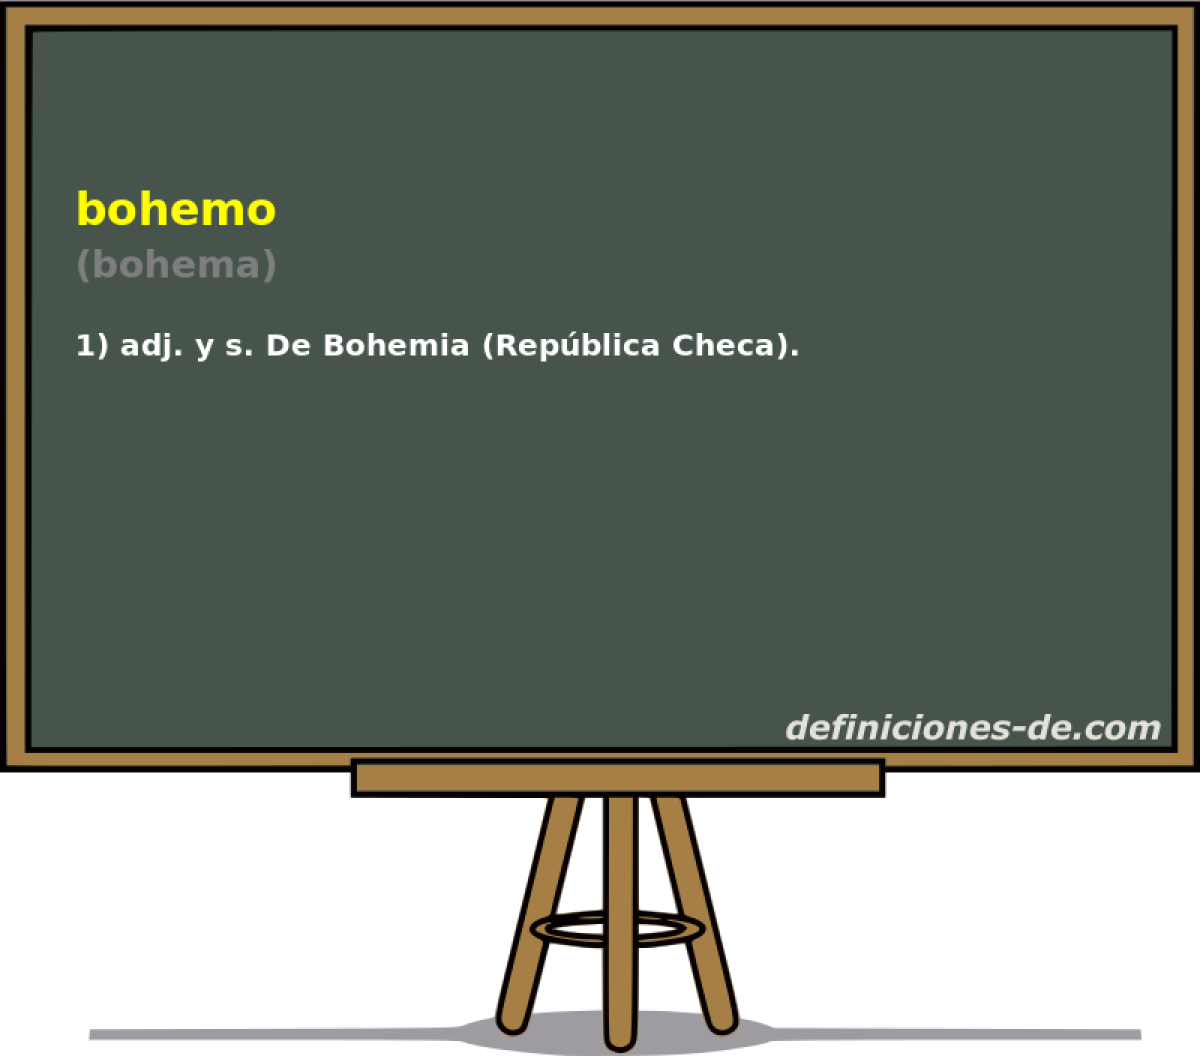 bohemo (bohema)